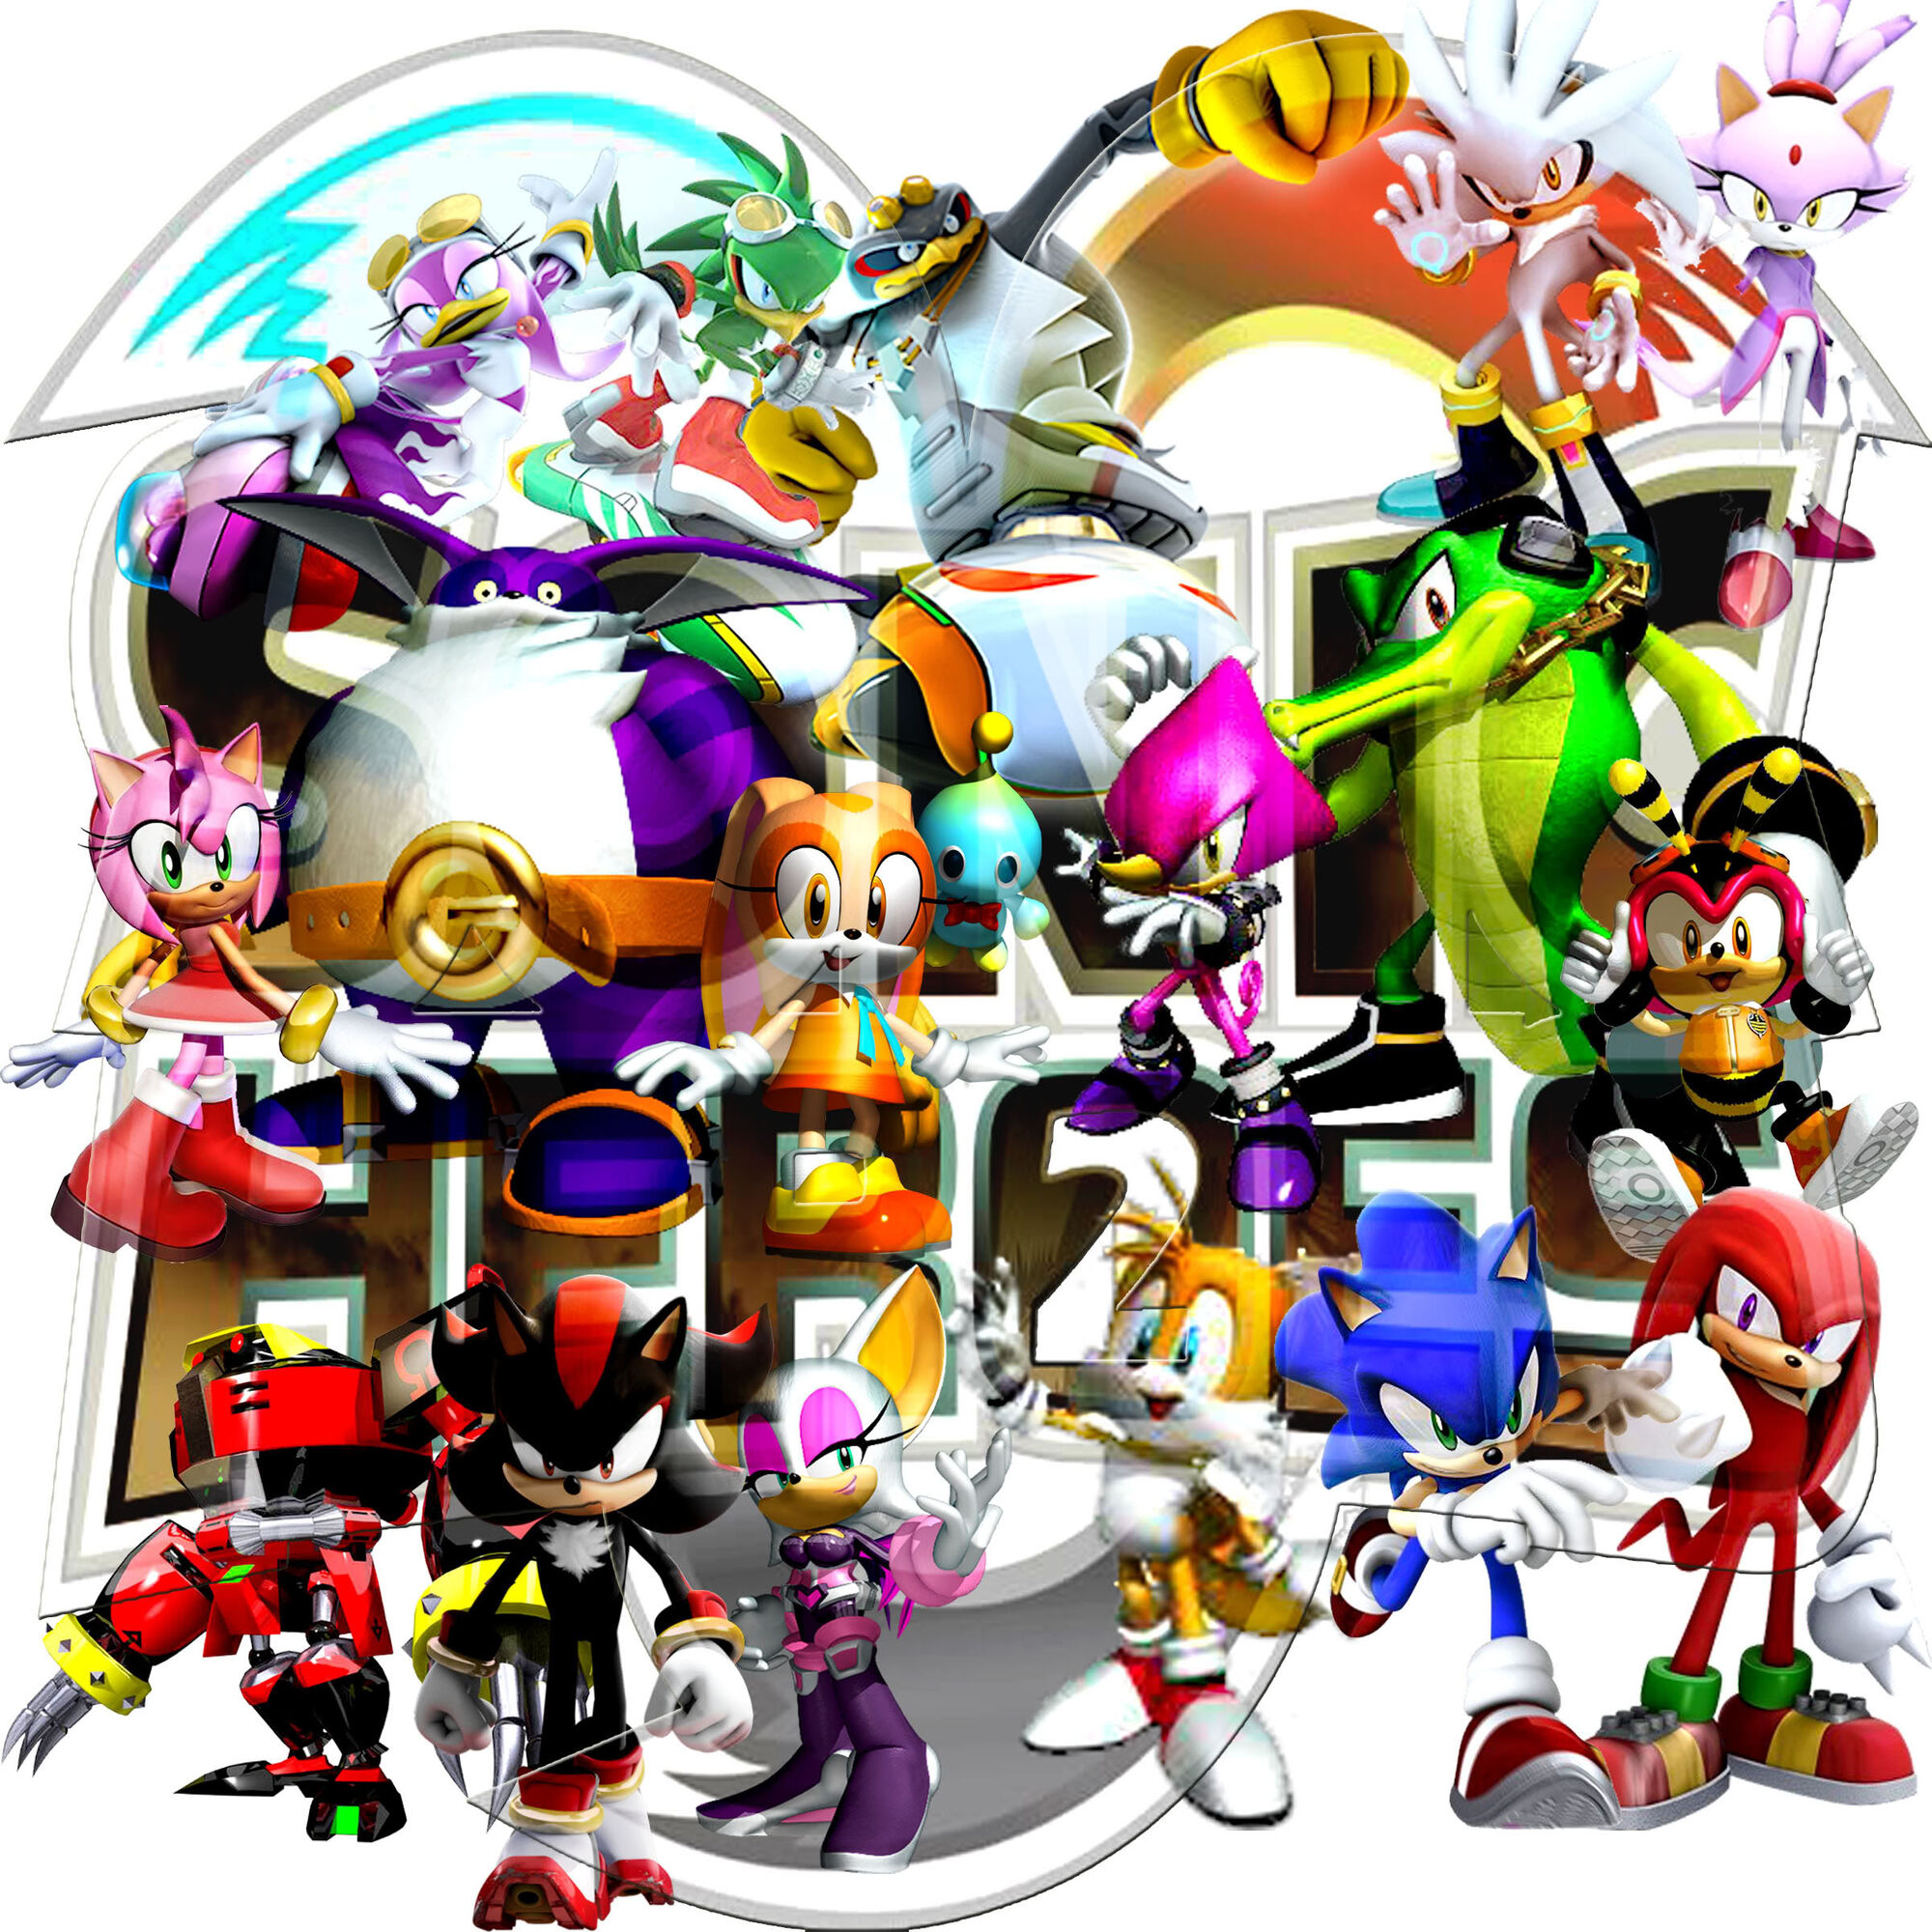 sonic-heroes-2-hedgehog-quest-sonic-fanon-wiki-fandom-powered-by